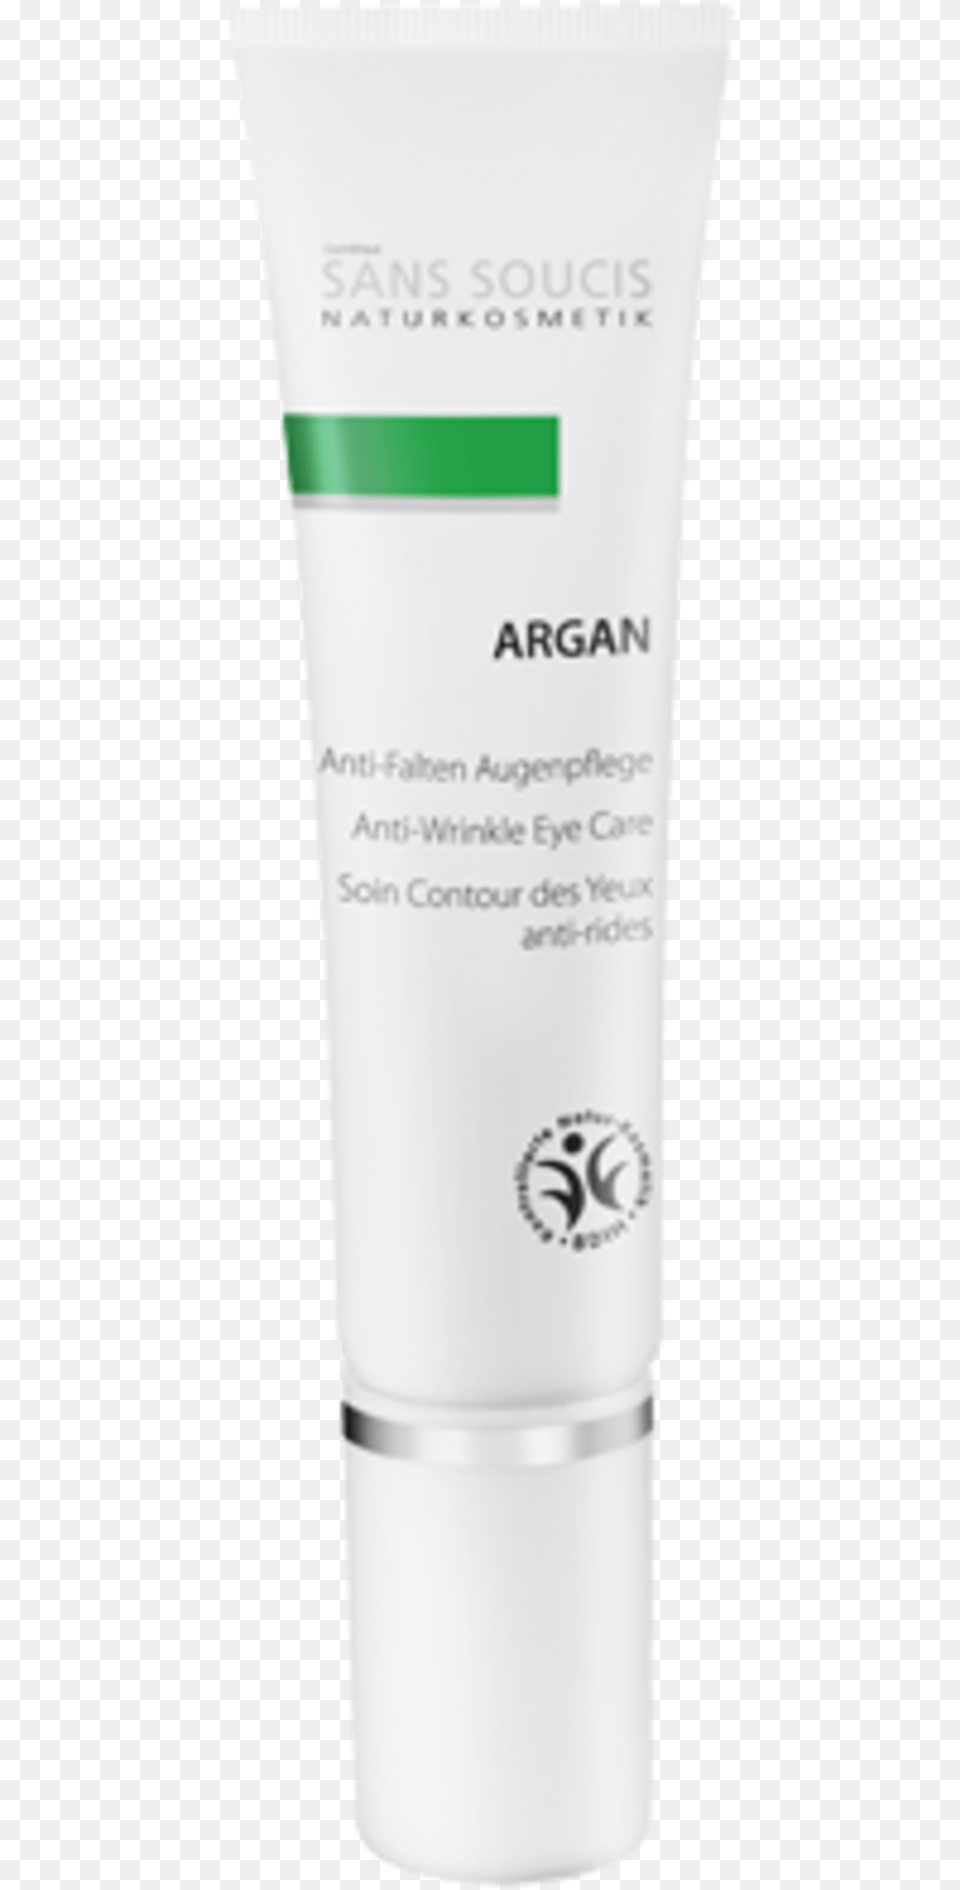 Anti Wrinkle Eye Care Sans Soucis Naturkosmetik Argan Anti Wrinkle Eye Care, Bottle, Toothpaste, Lotion, Shaker Free Png